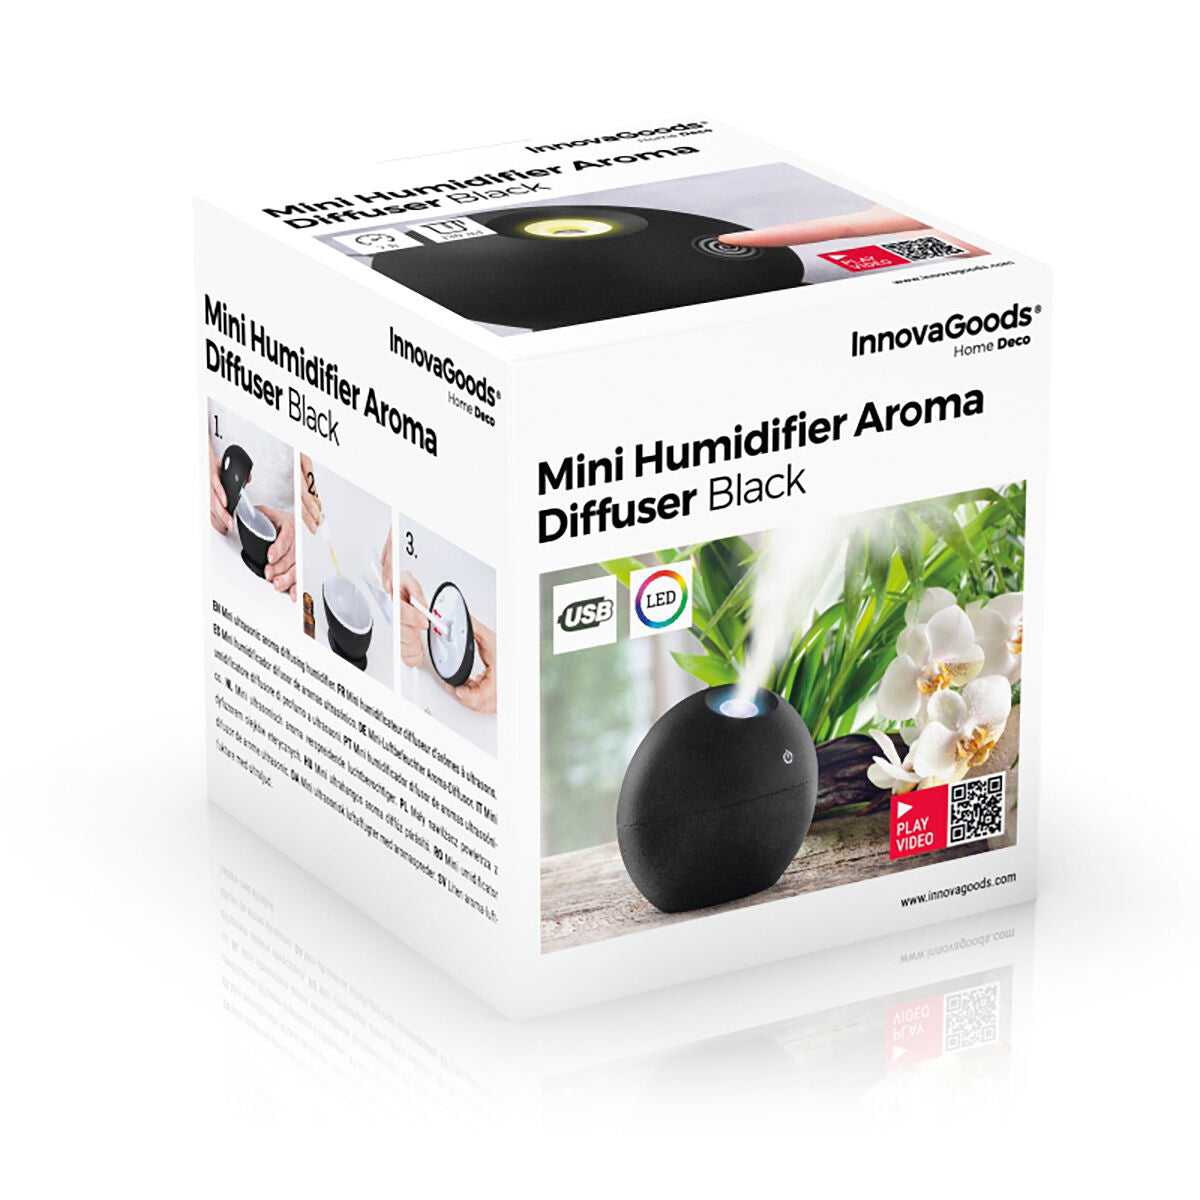 Kaufe Mini-Humidor Aroma-Diffusor Black InnovaGoods bei AWK Flagship um € 29.00